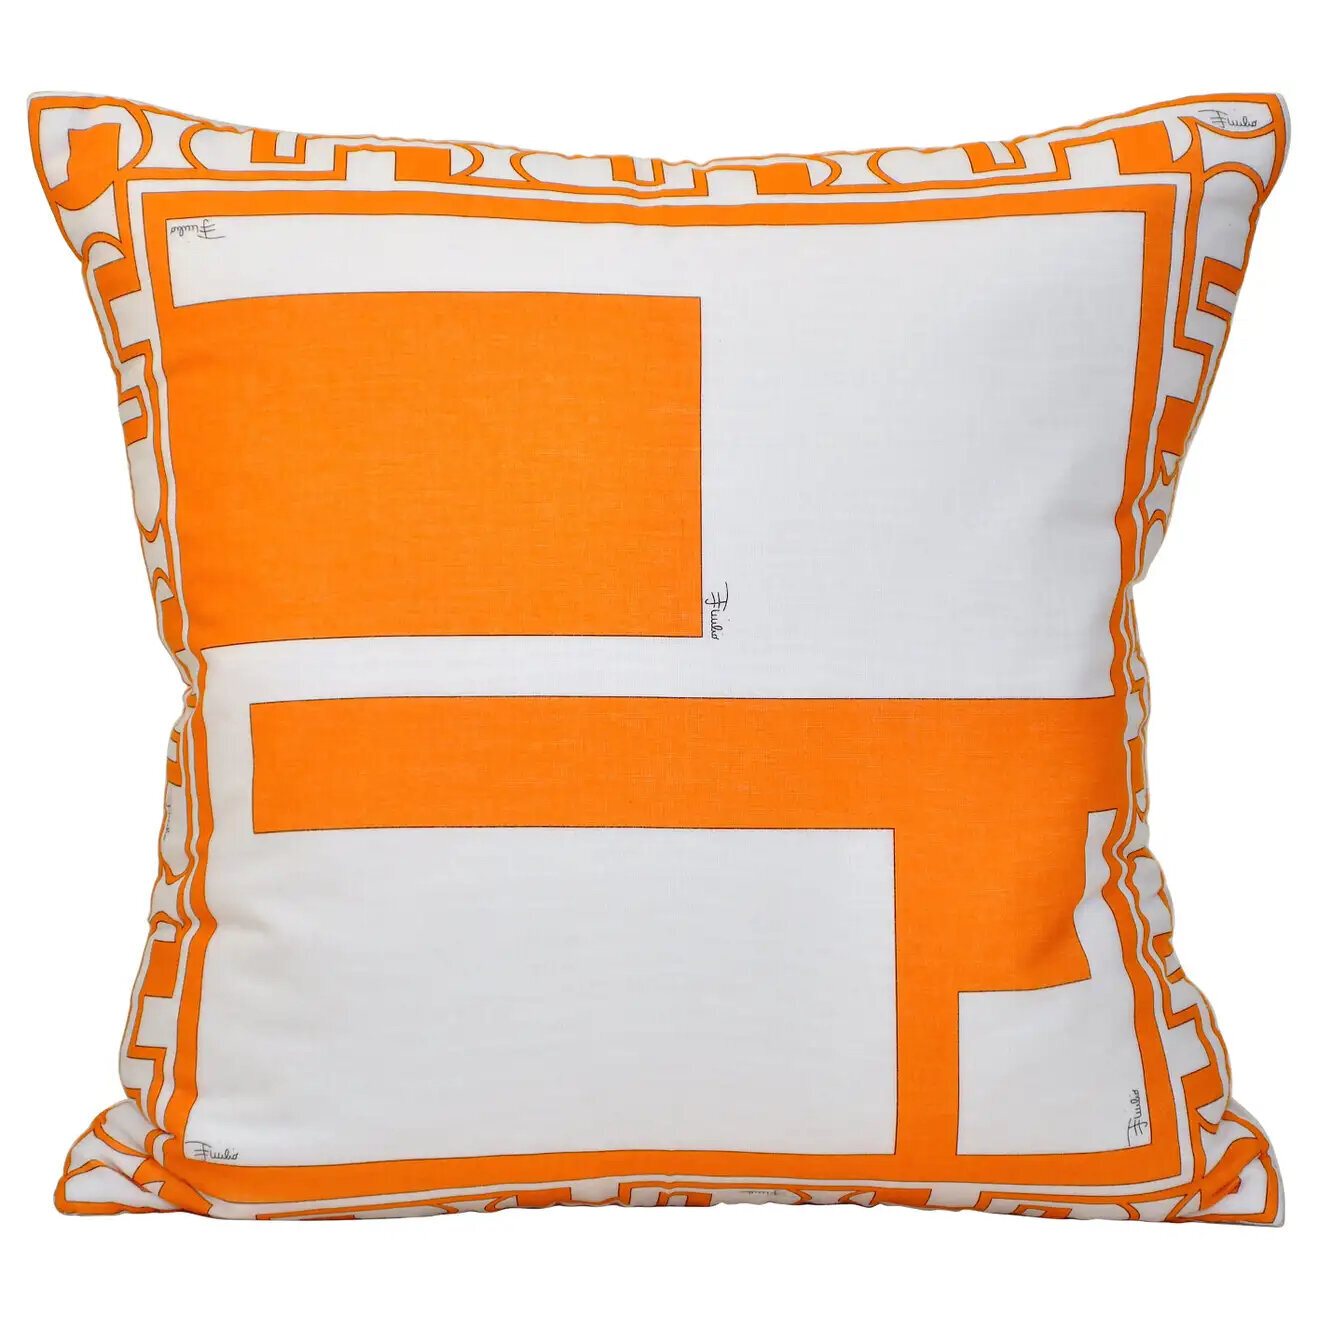 Katie+Larmour+Linen,+Vintage+Pucci+Silk+Scarf+backed+in+Pure+Irish+Linen,+Belfast+Antique+Dealer,+Couture+Cushions+Pillows+Interior+Decor,+Northern+Ireland,+sustainability,+orange+white+modernist+copy.jpg